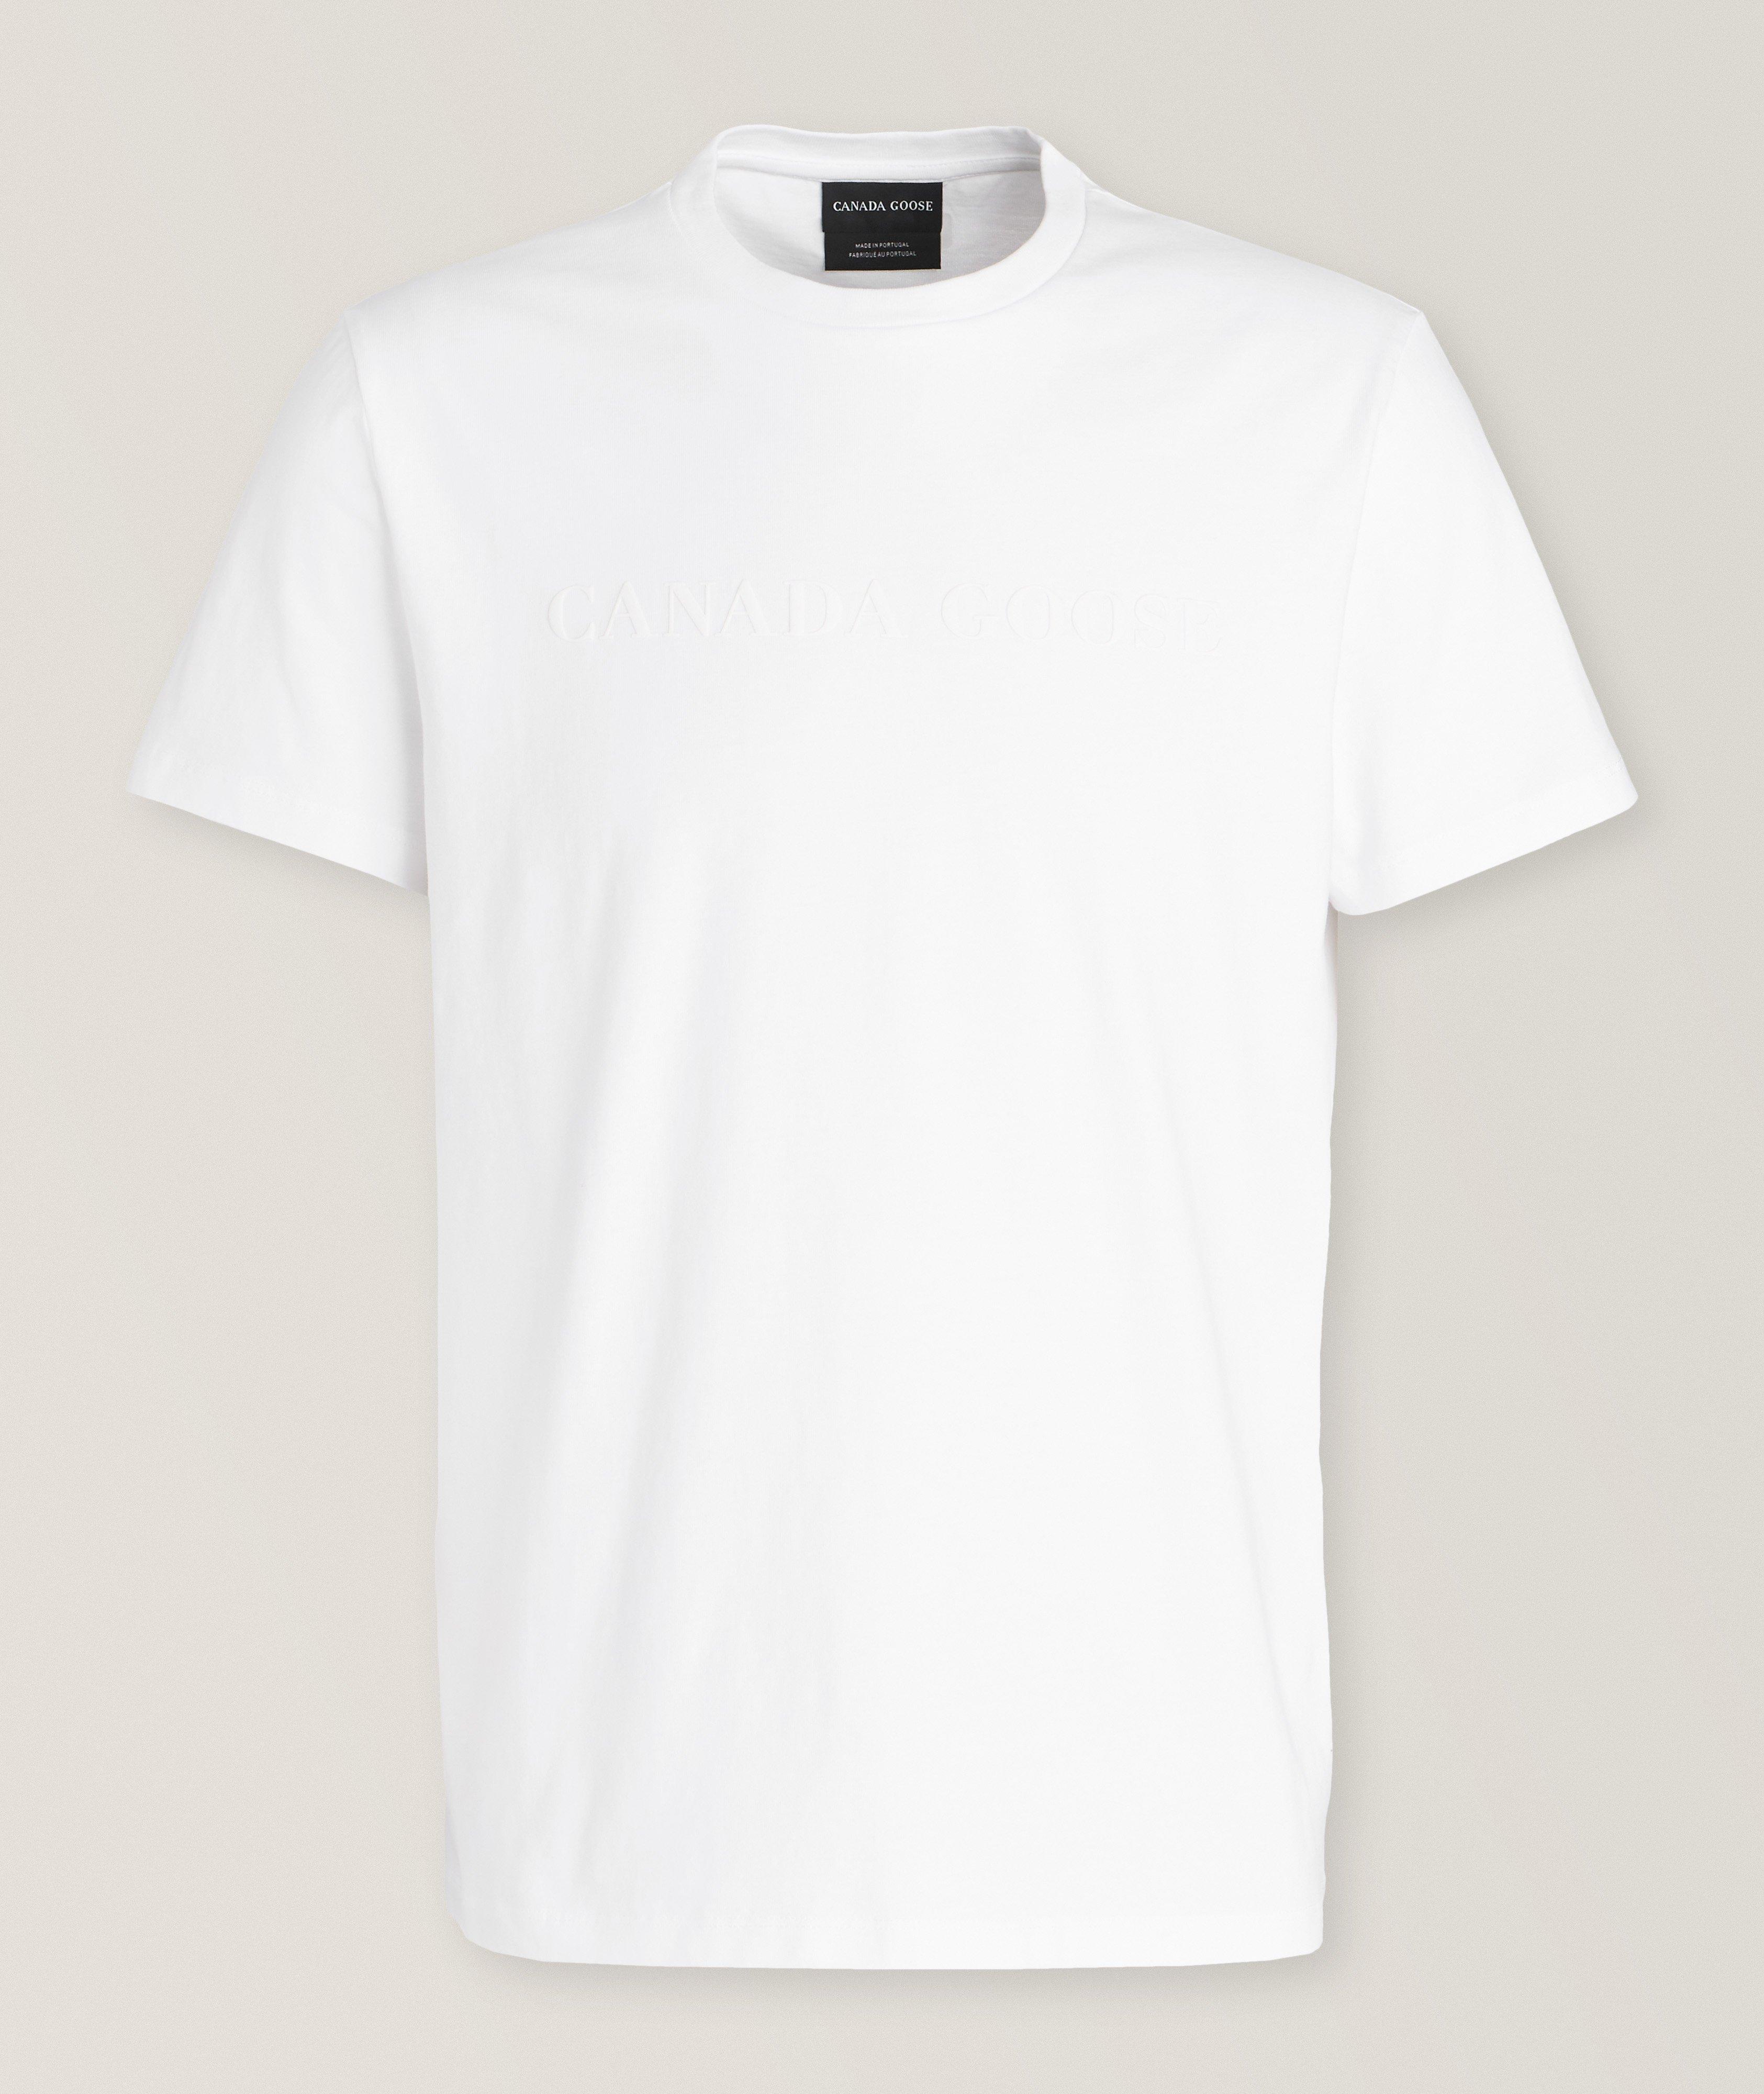 Emerson Rubberized Logo Cotton T-Shirt  image 0